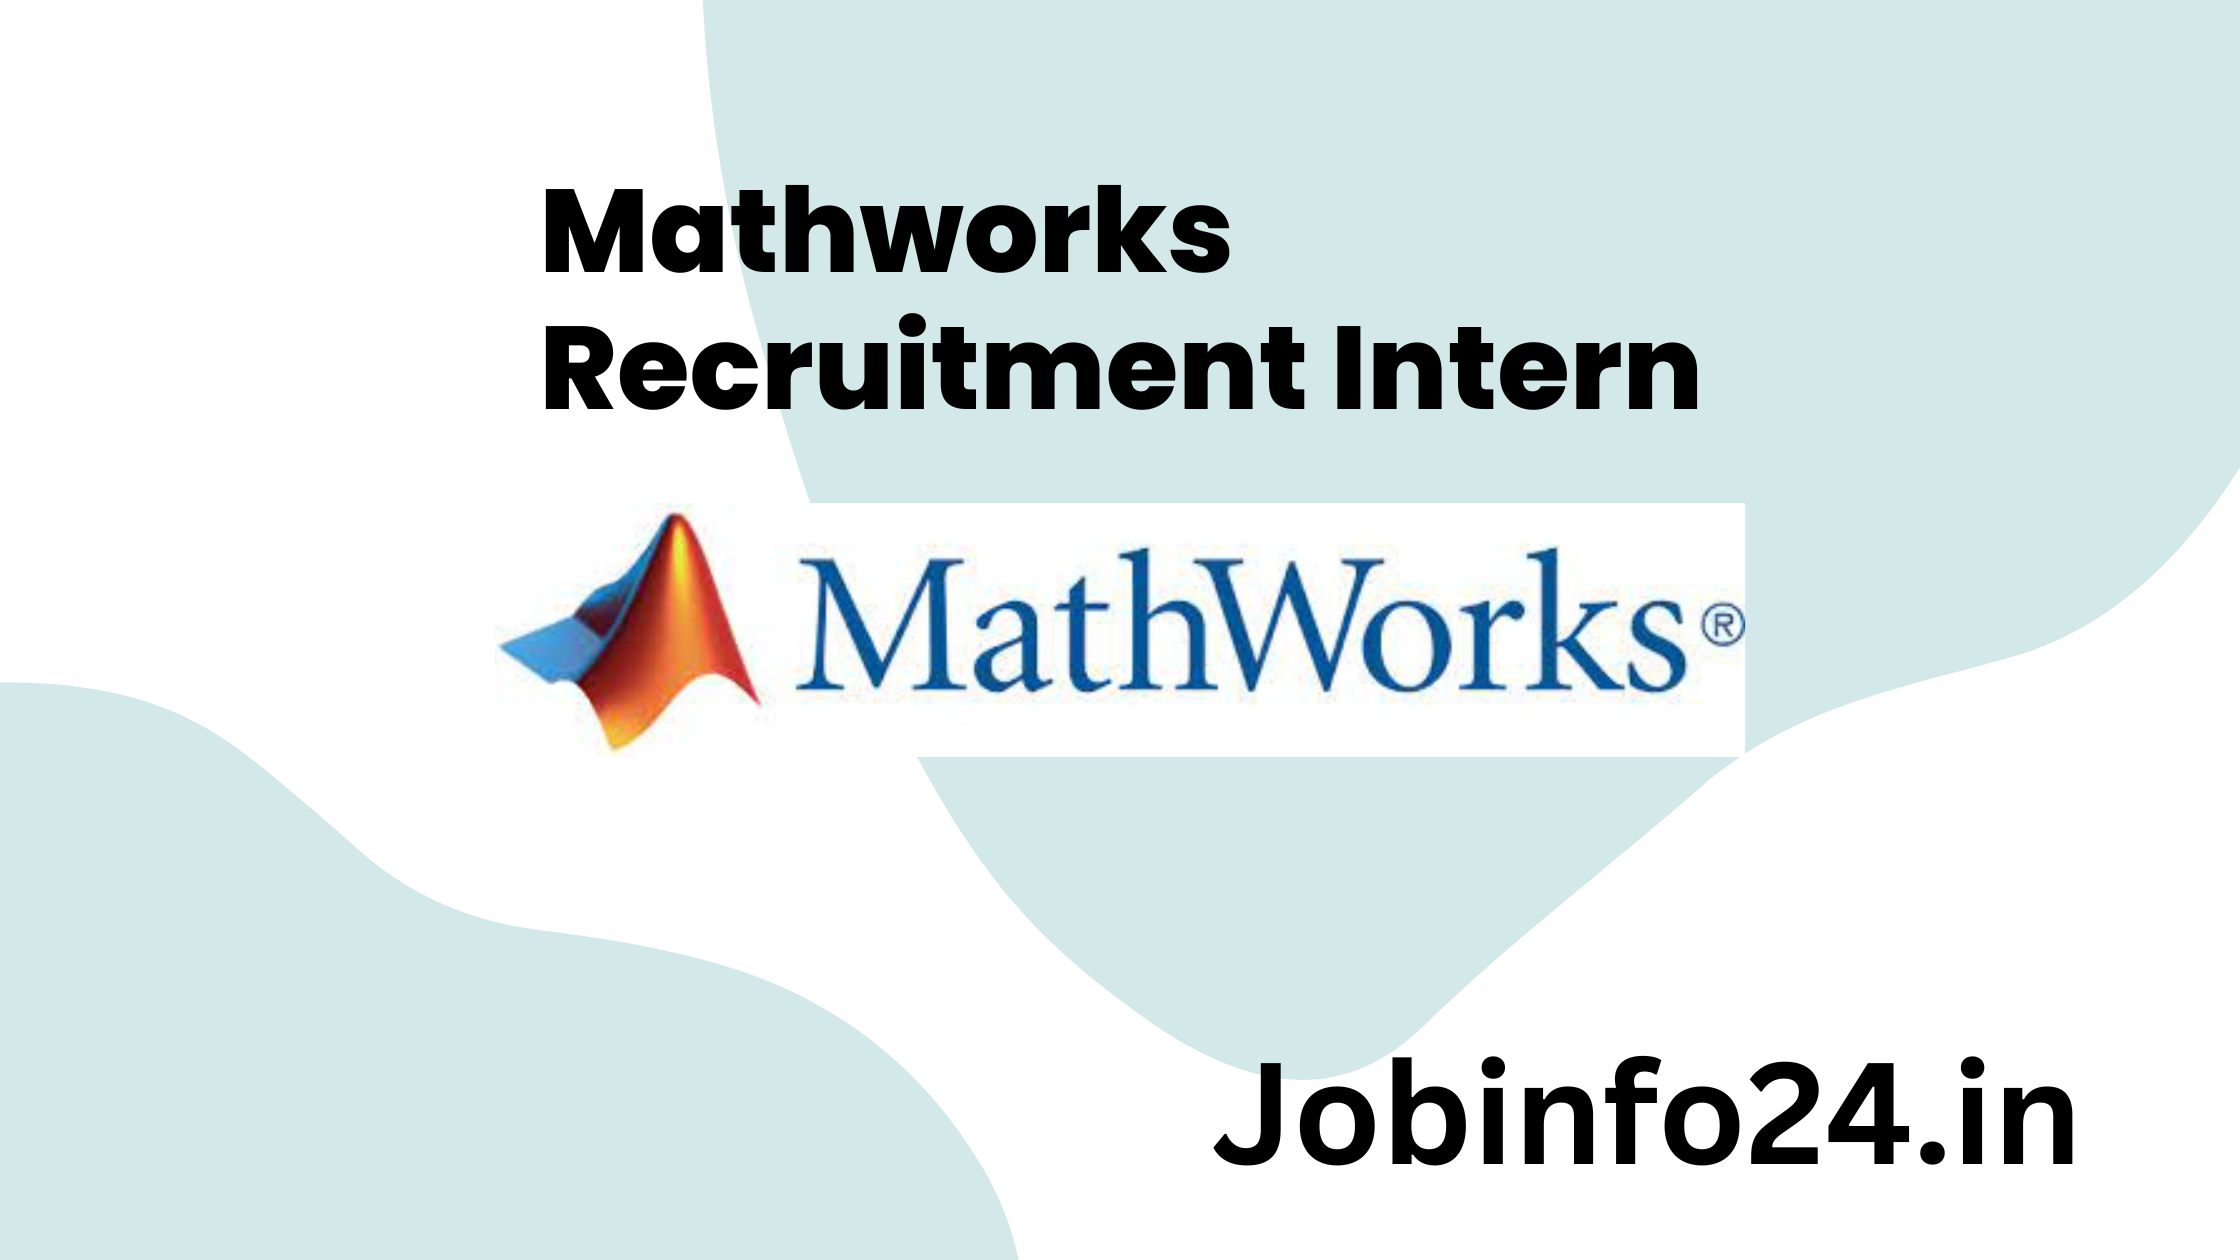 Mathworks Recruitment Intern